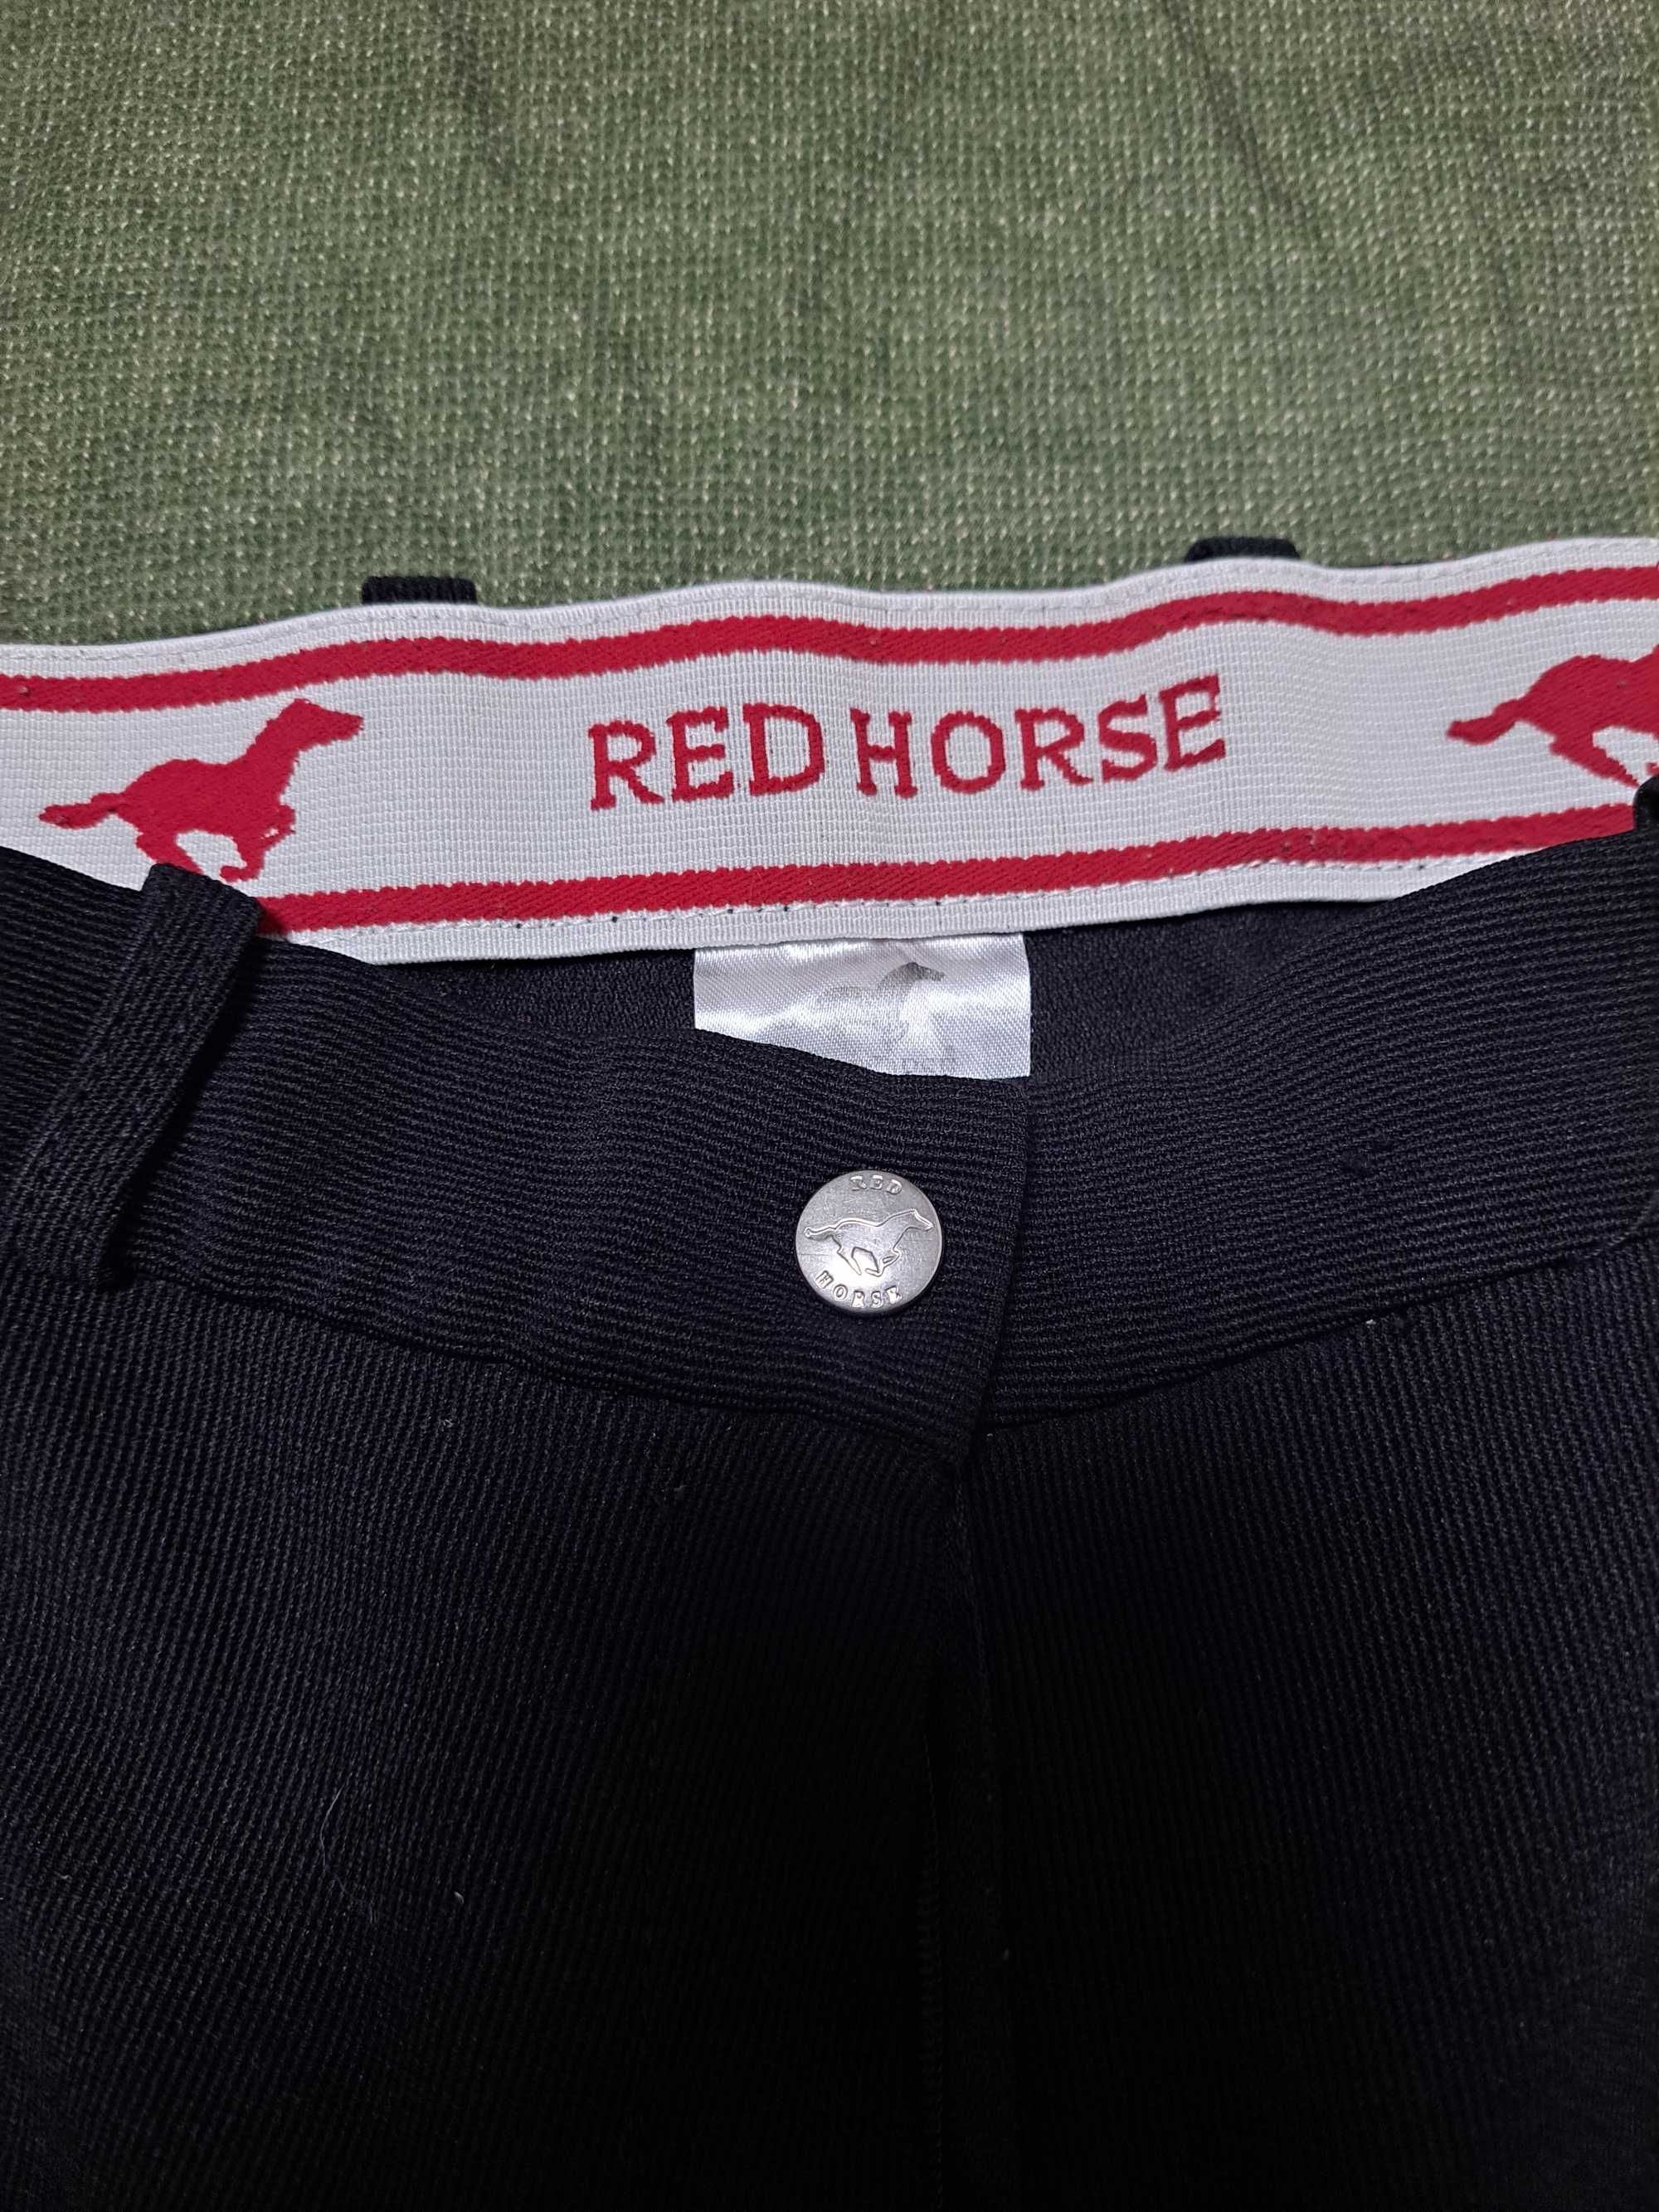 RED HORSE. Дамски панталон/брич за езда. Размер 42/S